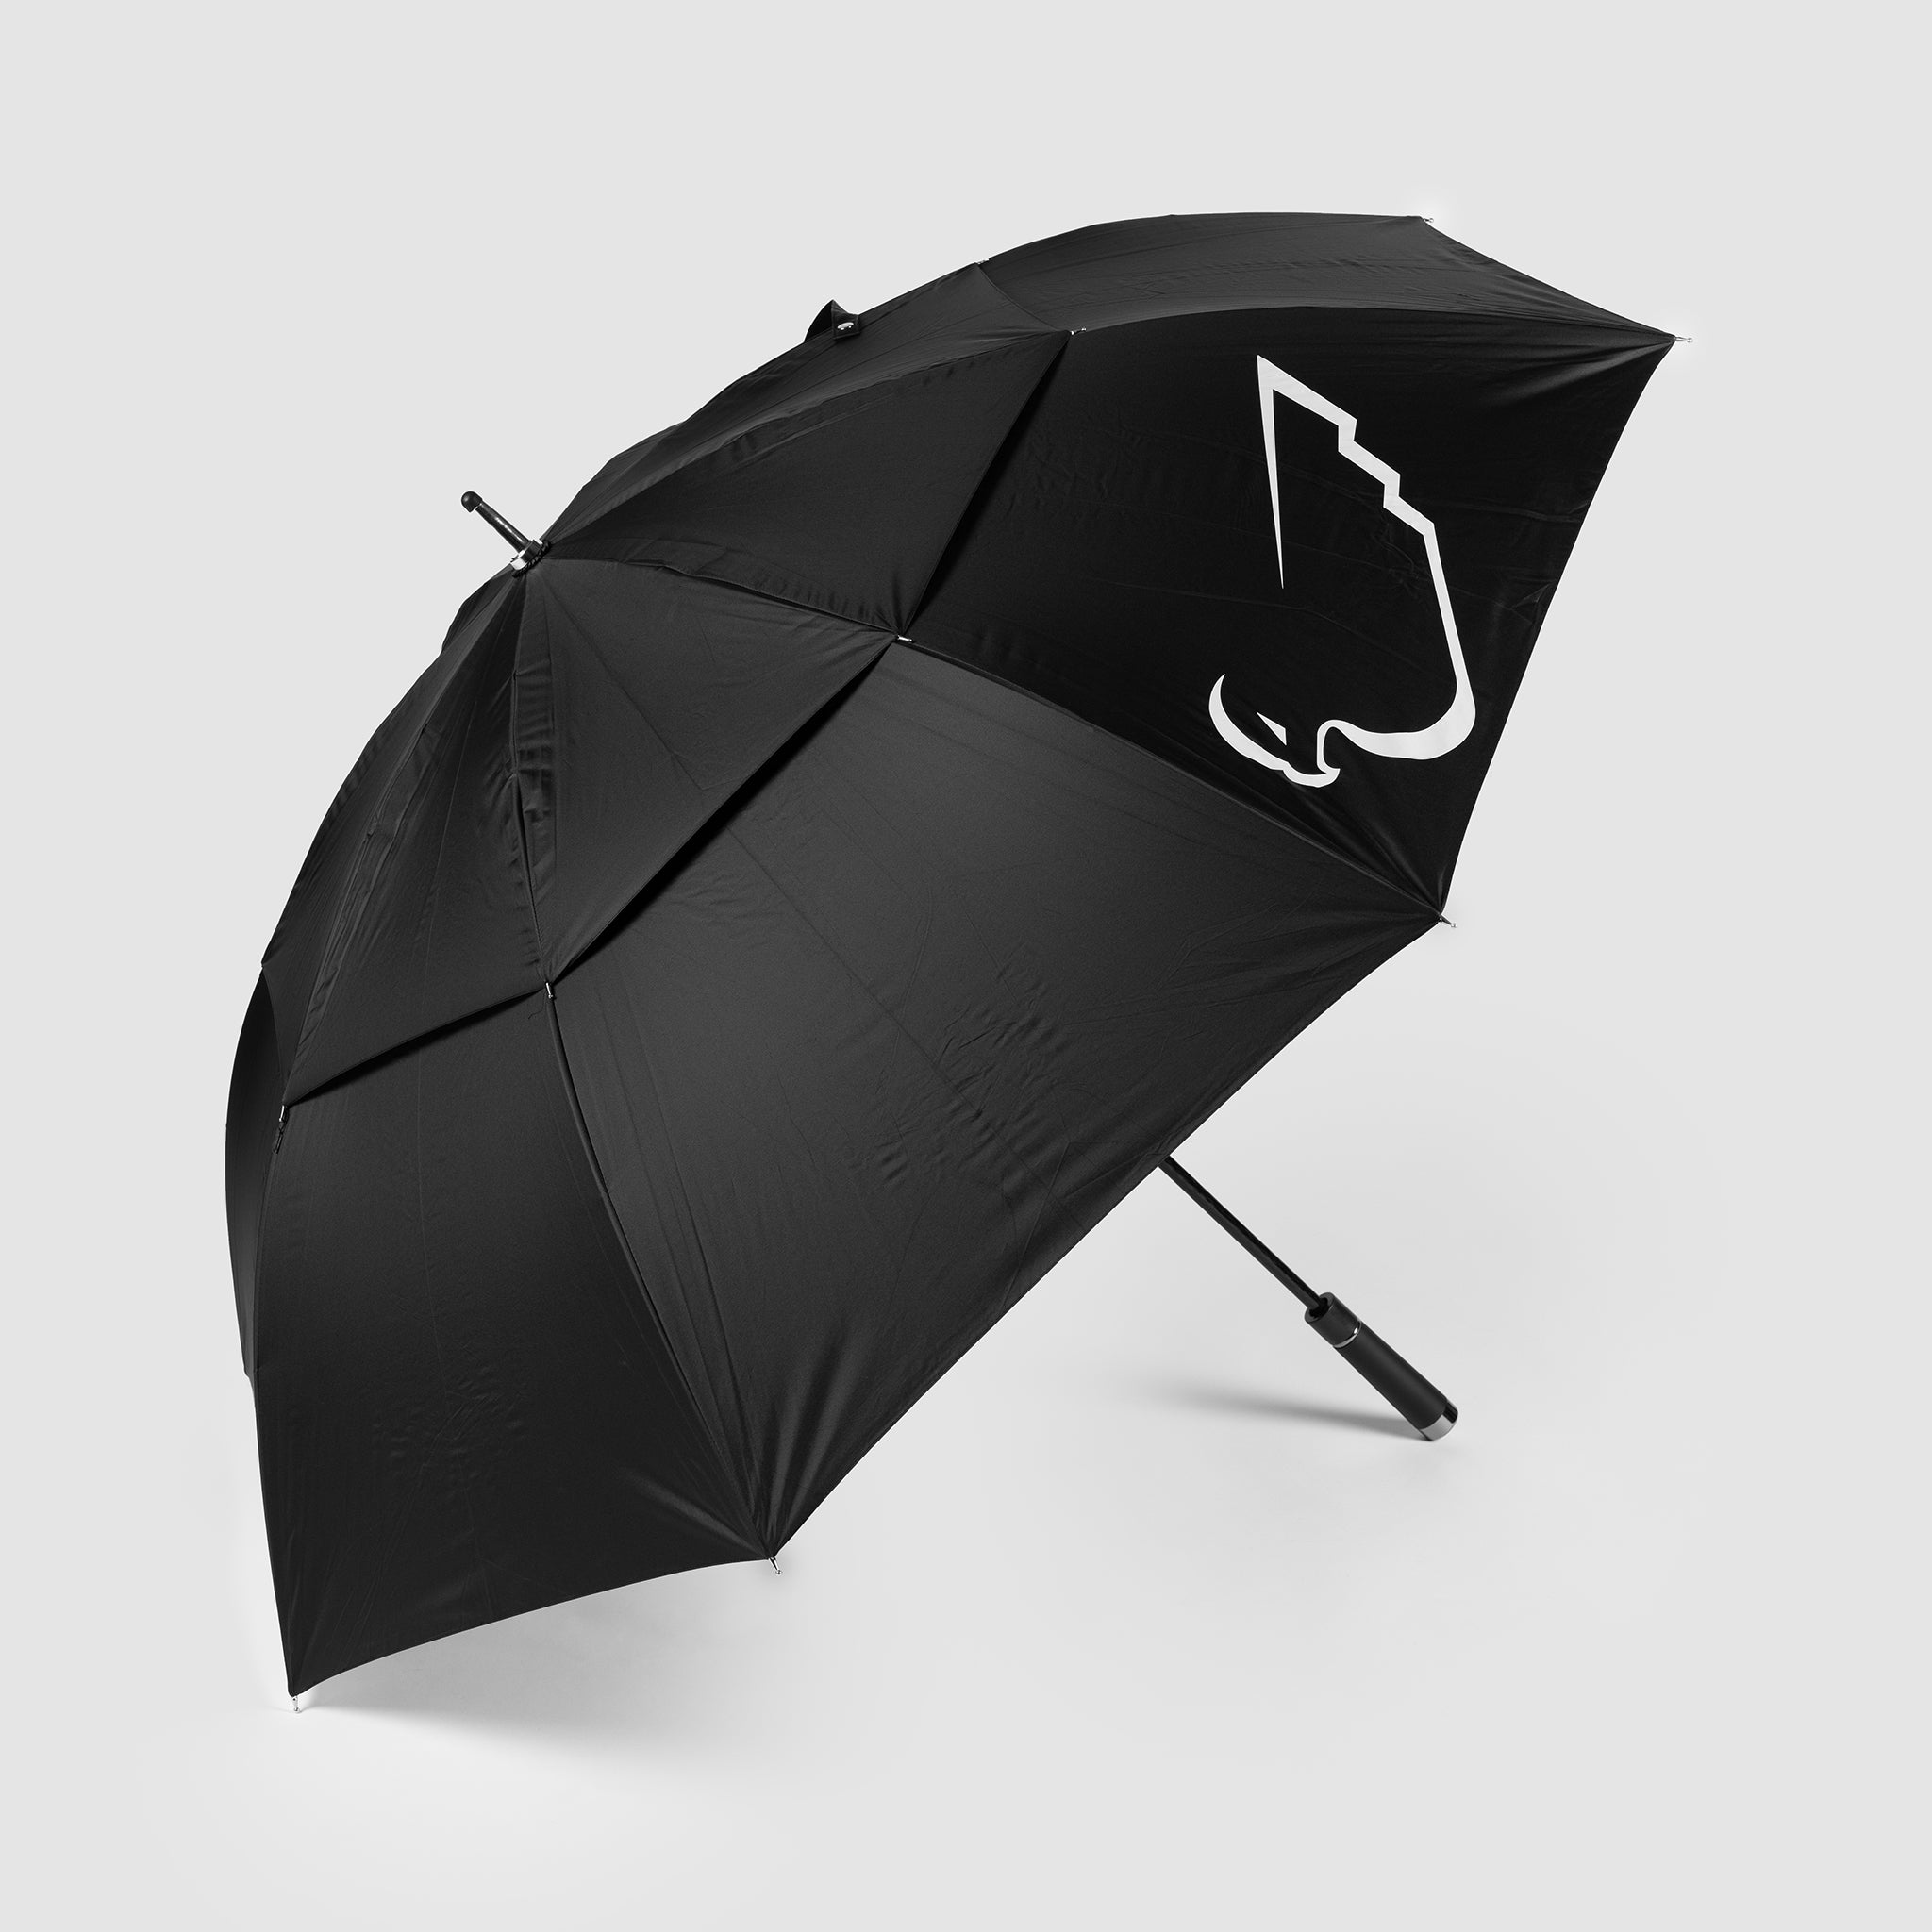 European Birdies - Disc Golf Umbrella